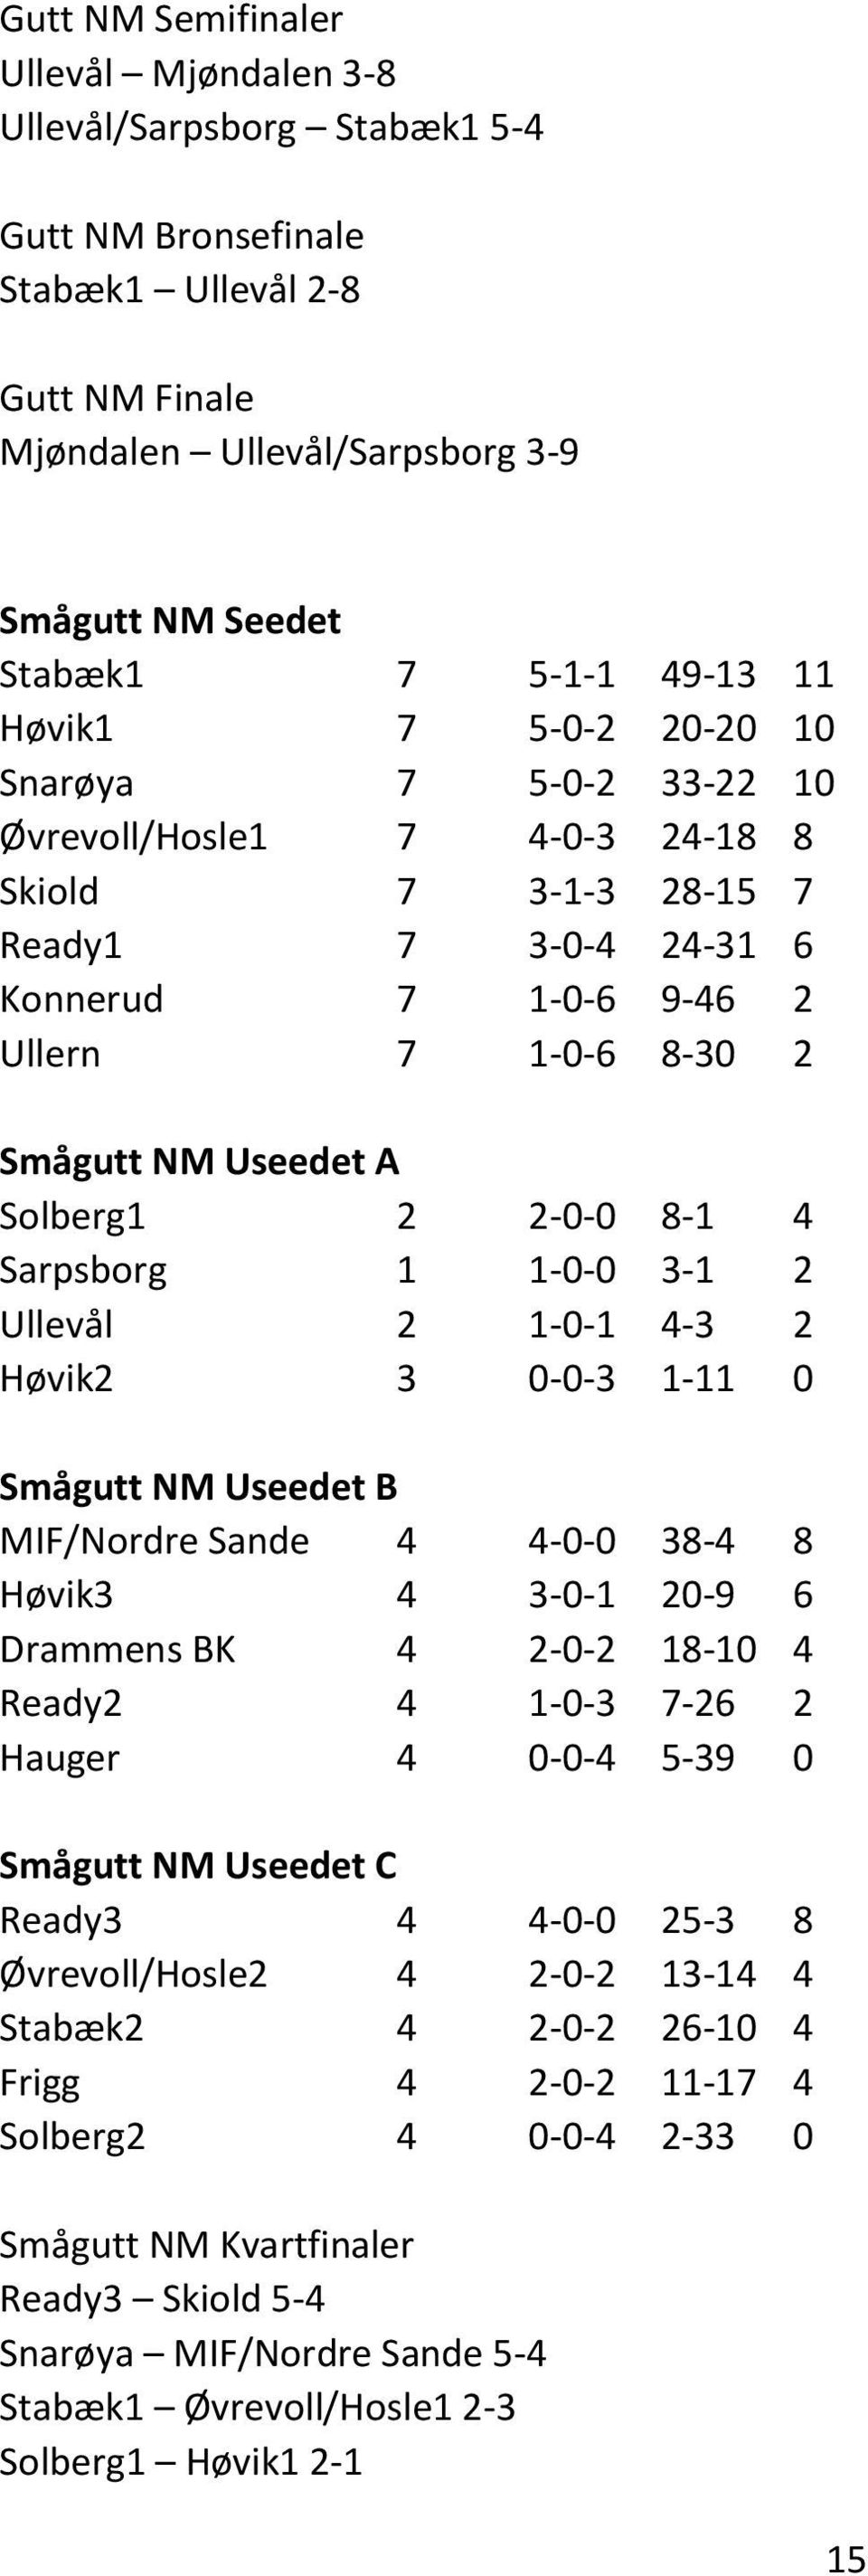 Solberg1 2 2-0-0 8-1 4 Sarpsborg 1 1-0-0 3-1 2 Ullevål 2 1-0-1 4-3 2 Høvik2 3 0-0-3 1-11 0 Smågutt NM Useedet B MIF/Nordre Sande 4 4-0-0 38-4 8 Høvik3 4 3-0-1 20-9 6 Drammens BK 4 2-0-2 18-10 4